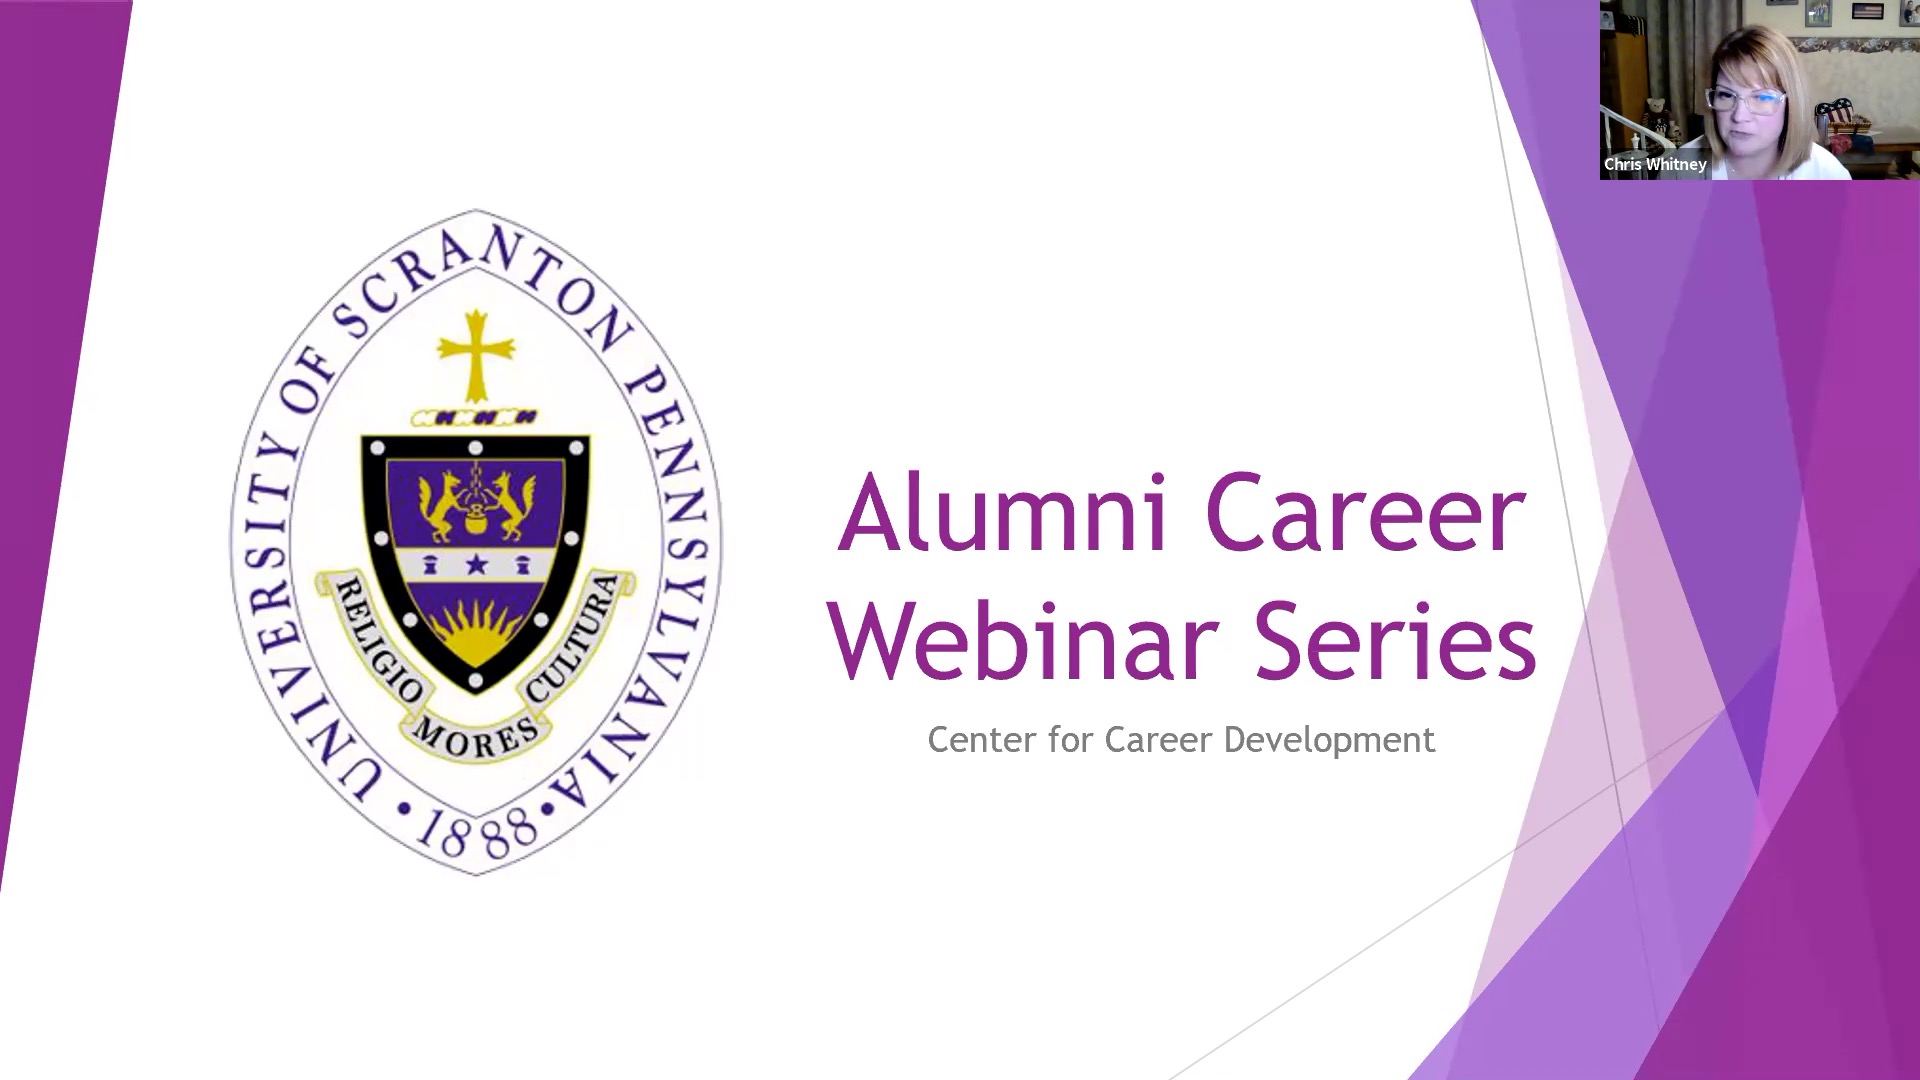 University Continues Alumni Career Development Webinar Series Feb. 24